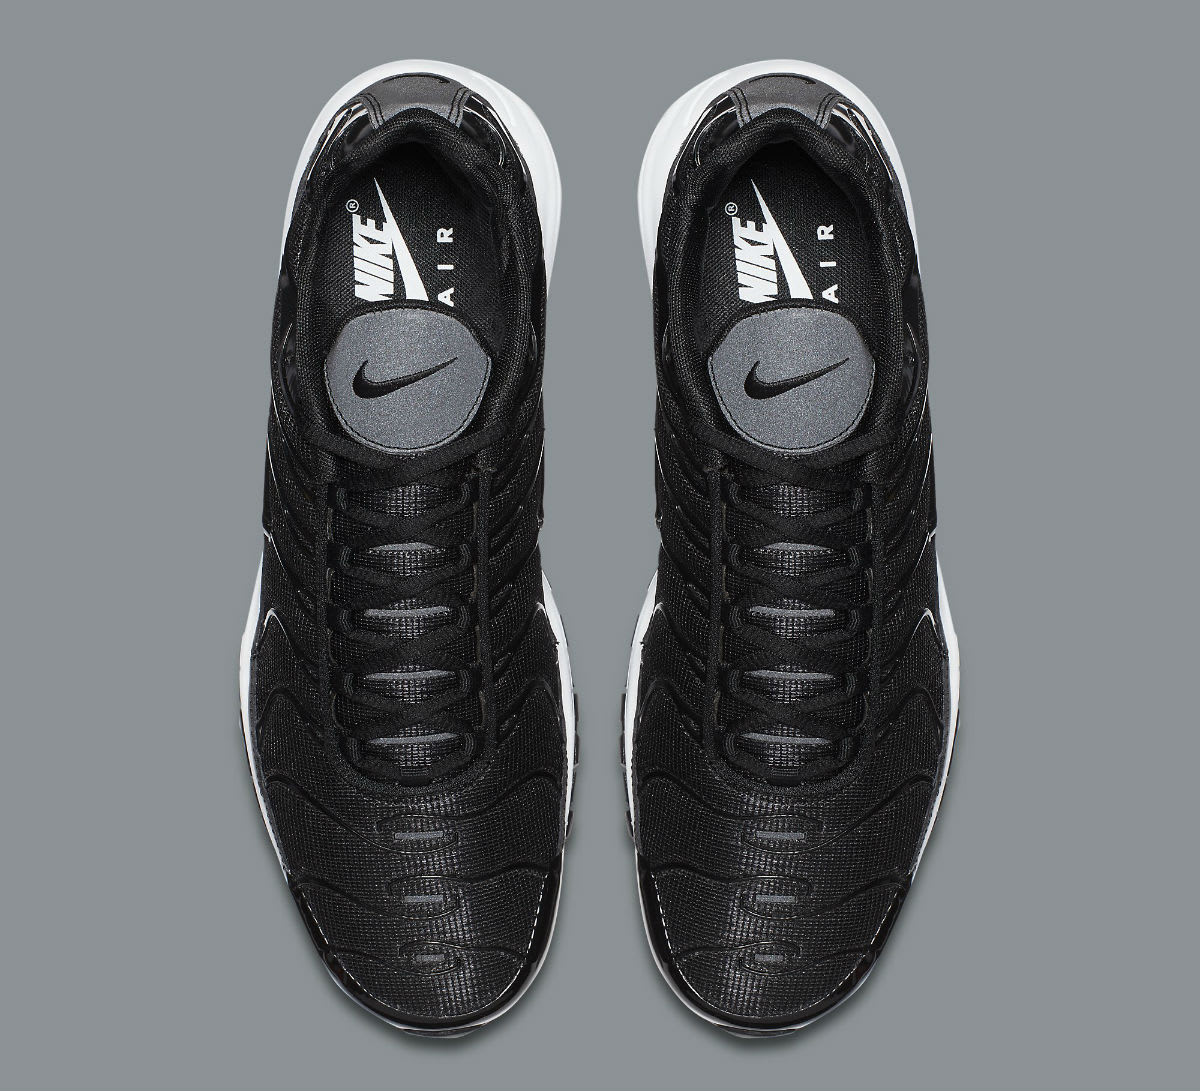 Nike Air Max Plus 97 Black/White Release Date Top AH8144-001